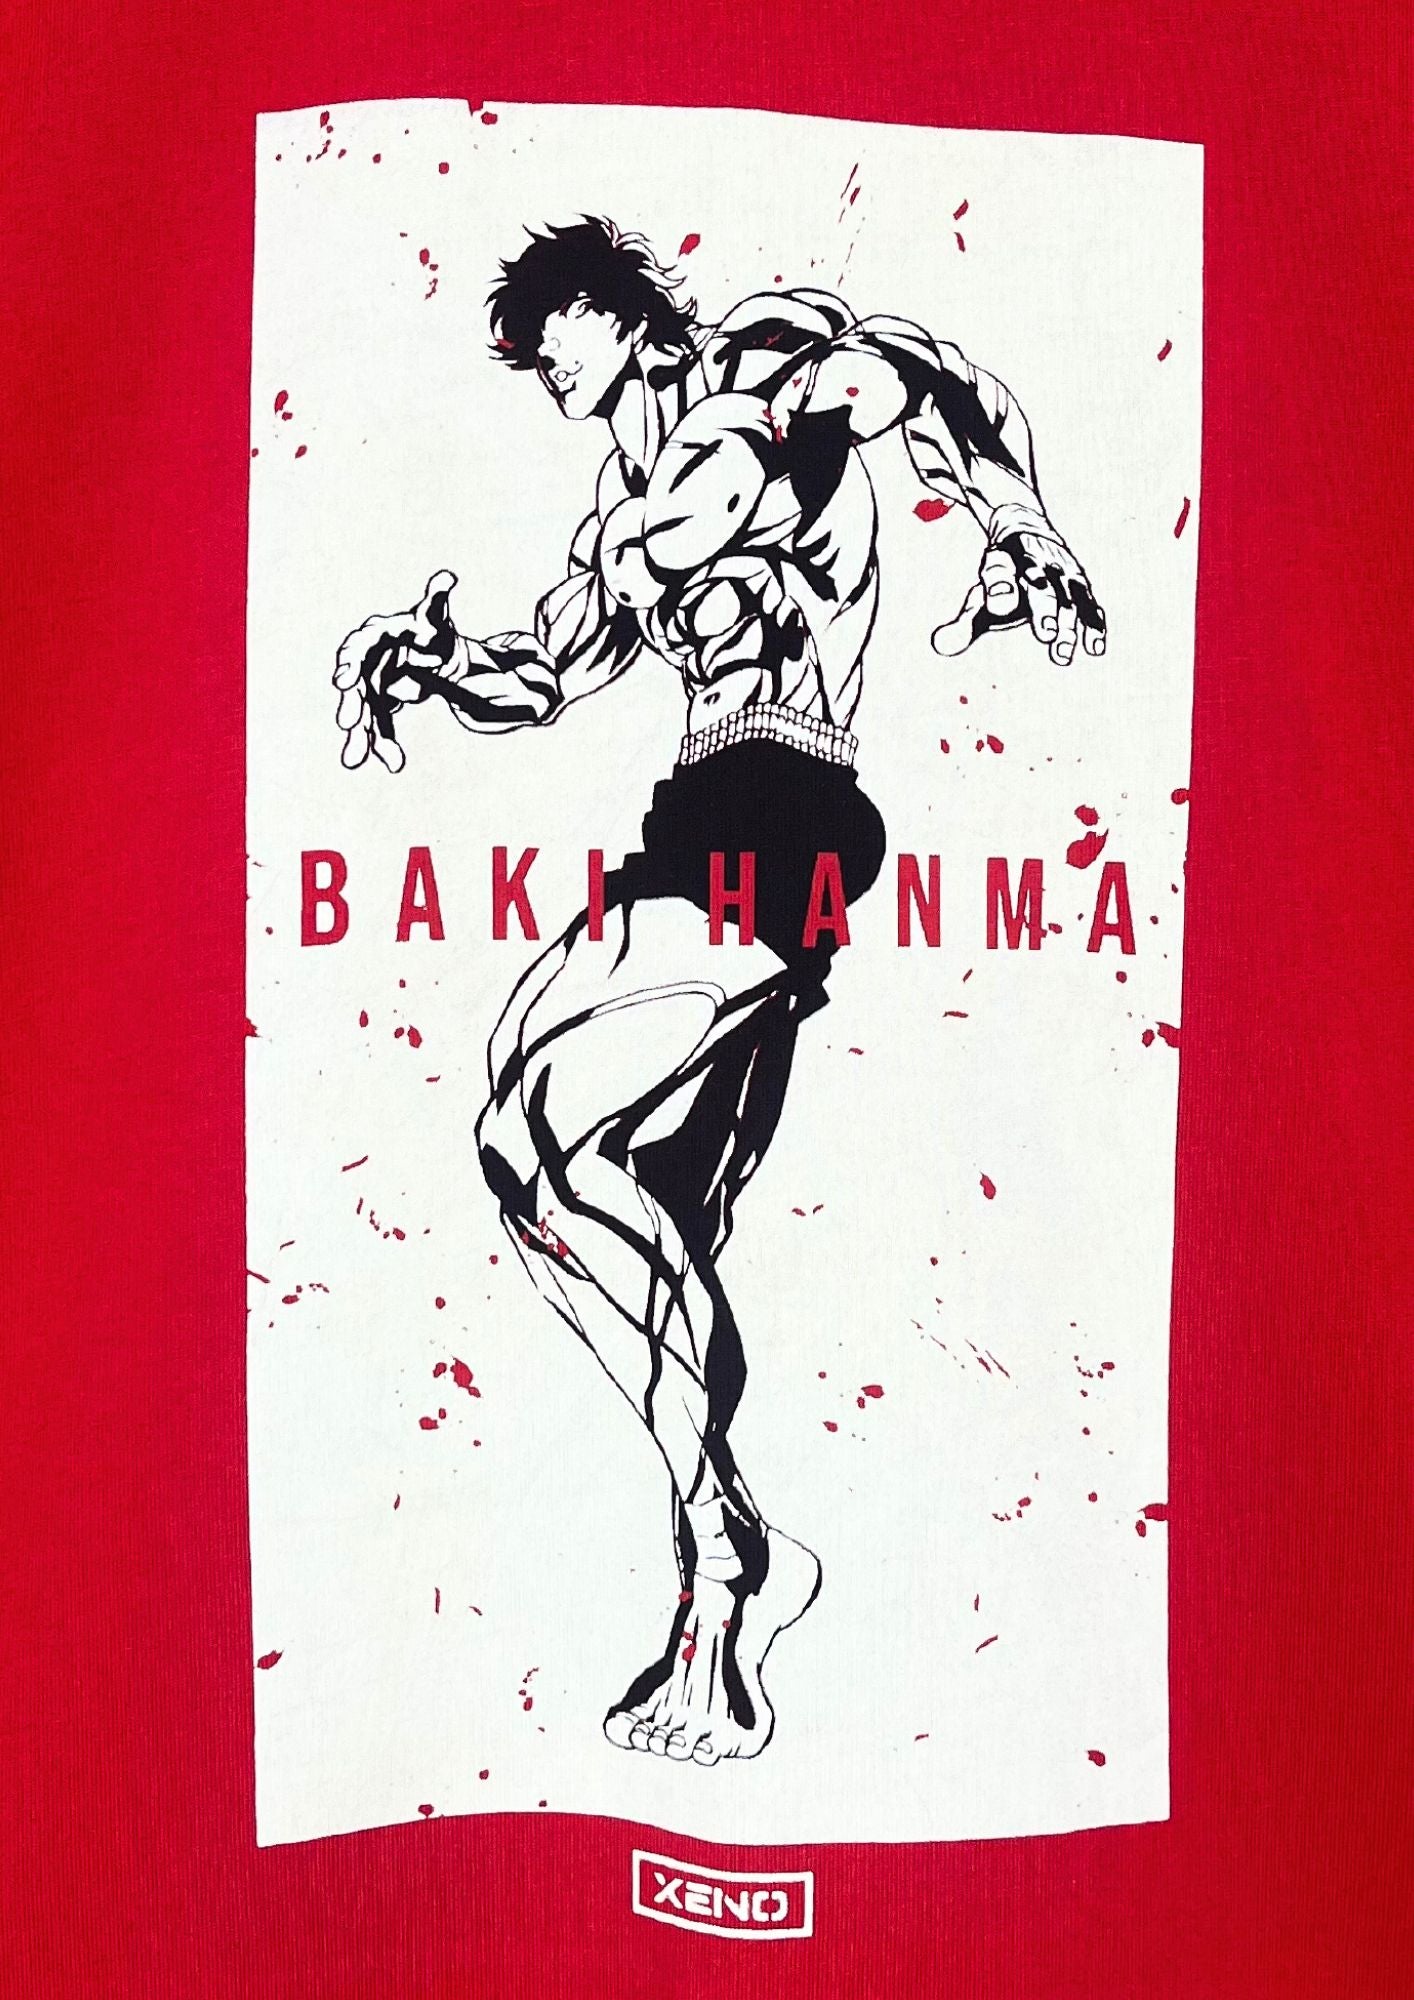 2020 Baki The Grappler x Xeno Baki Hanma T-shirt